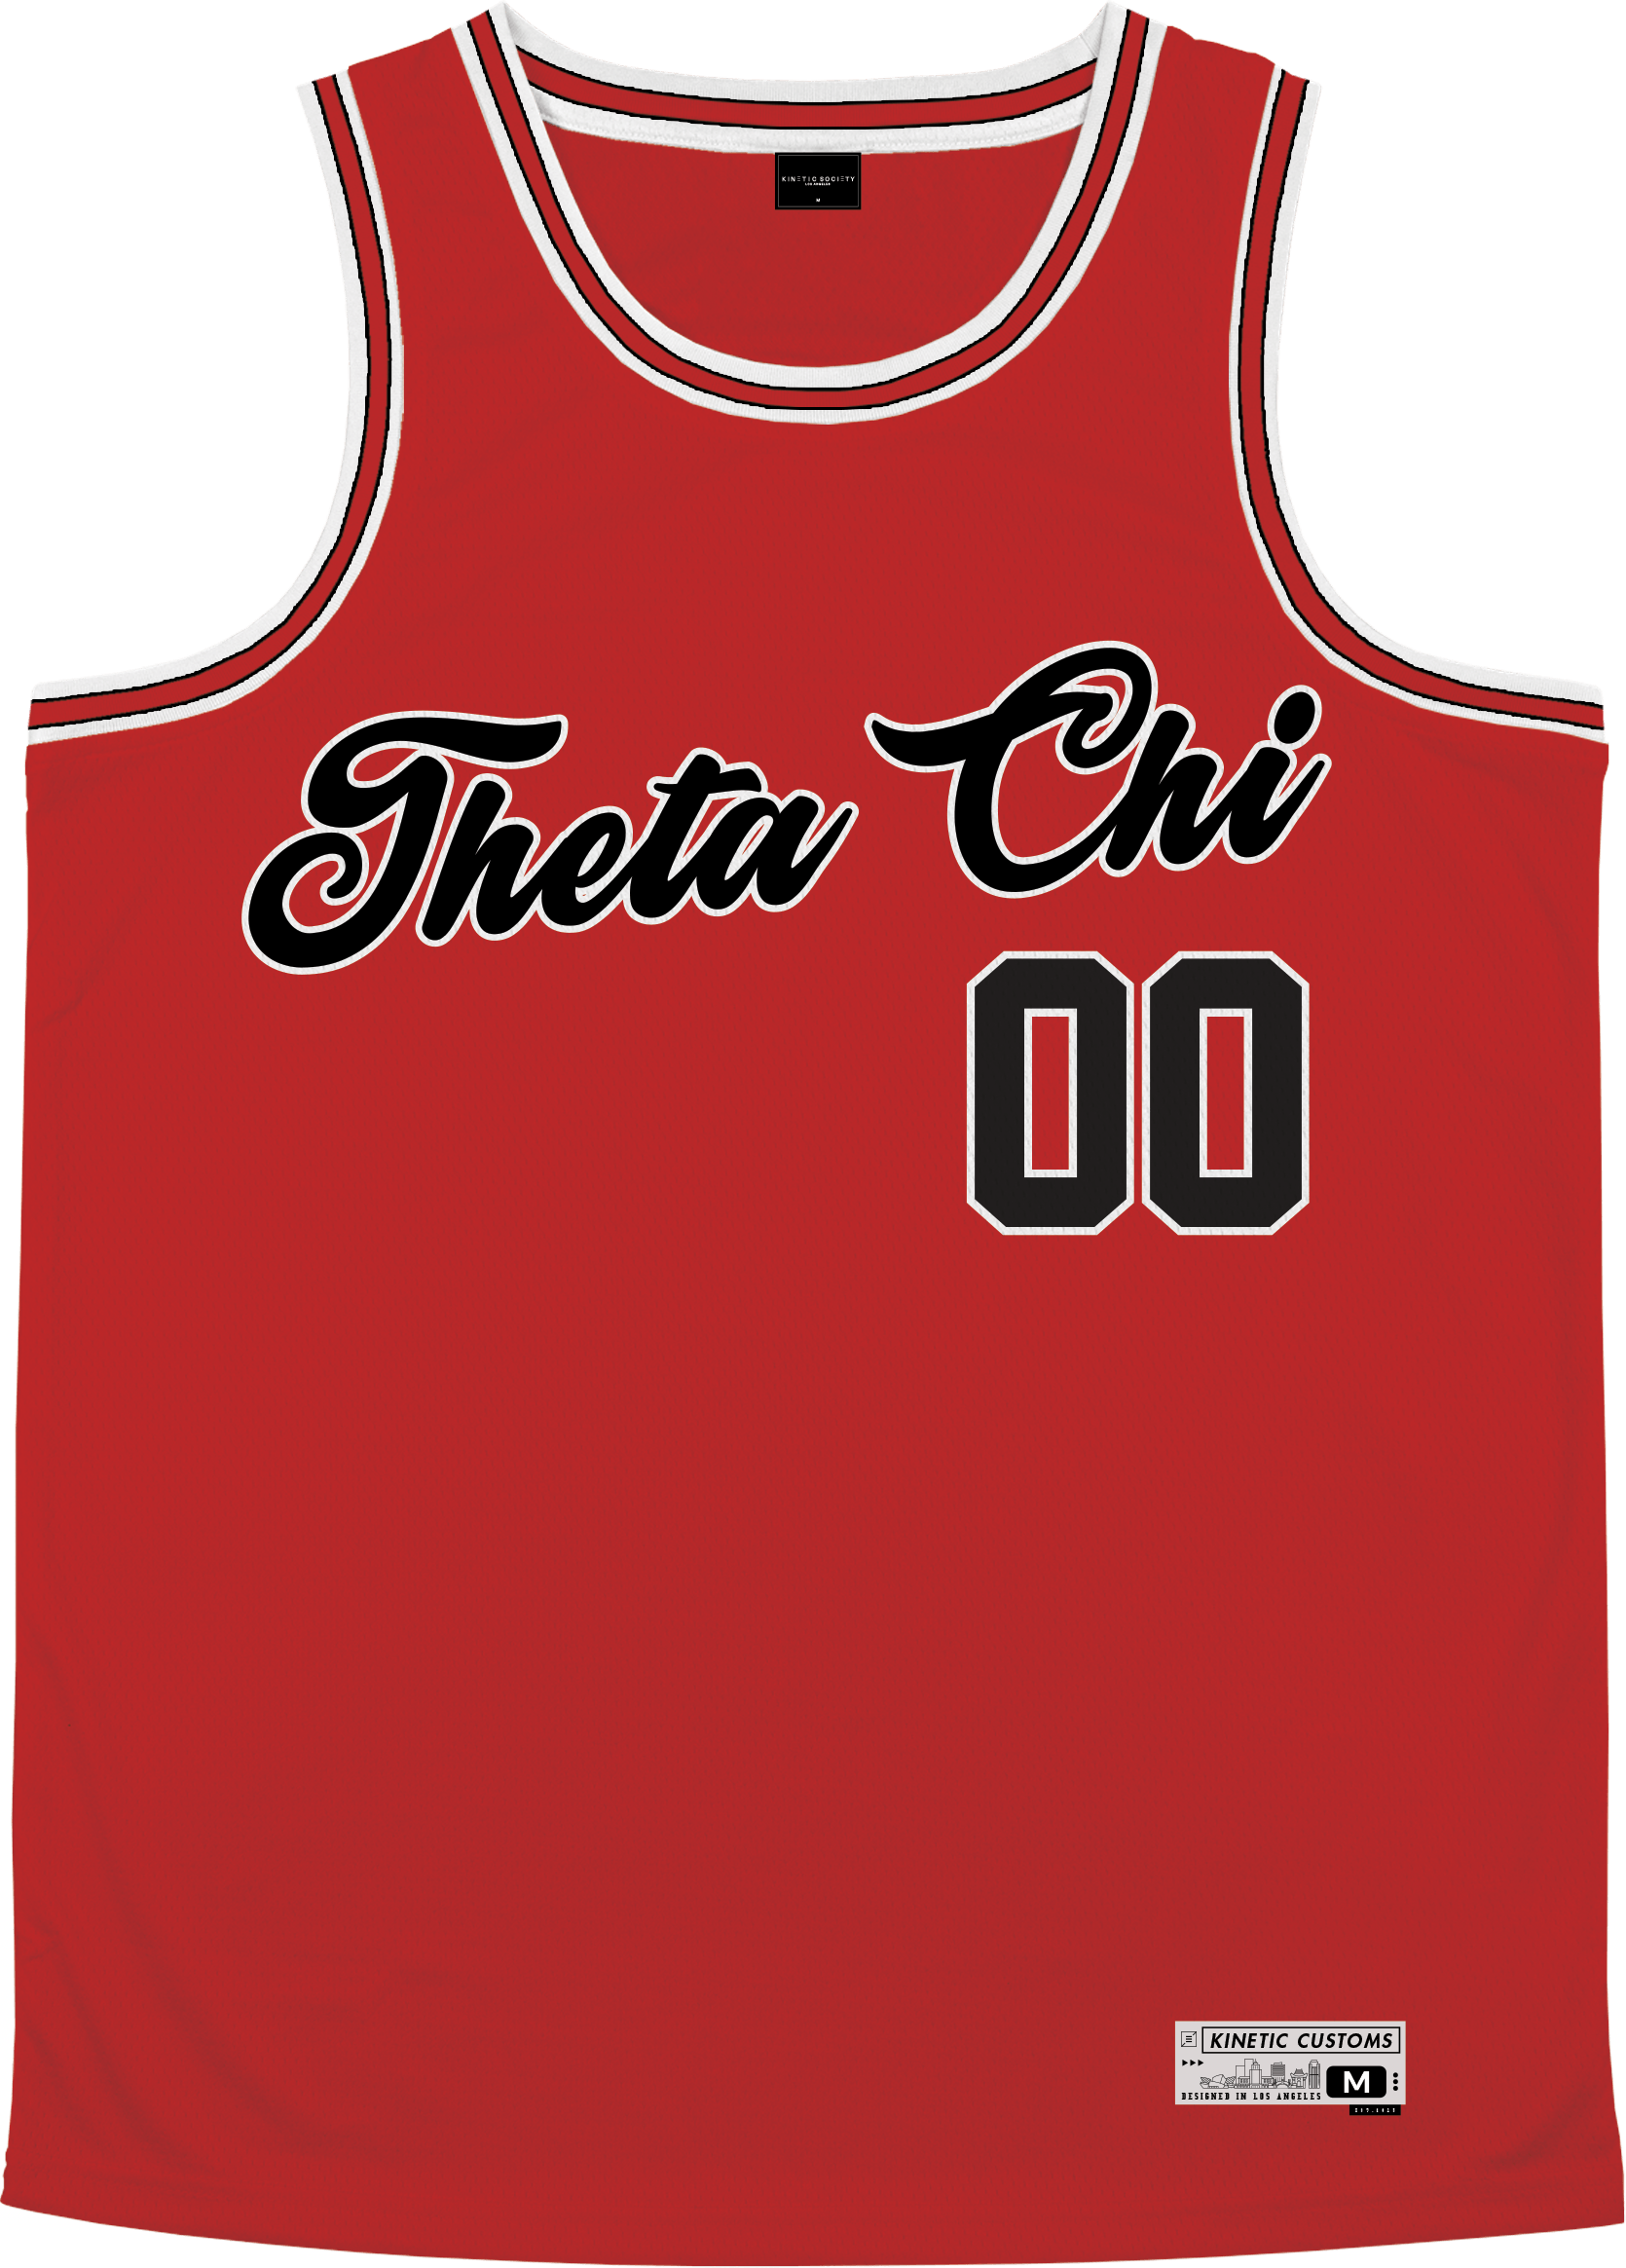 Theta Chi - Big Red Basketball Jersey - Kinetic Society